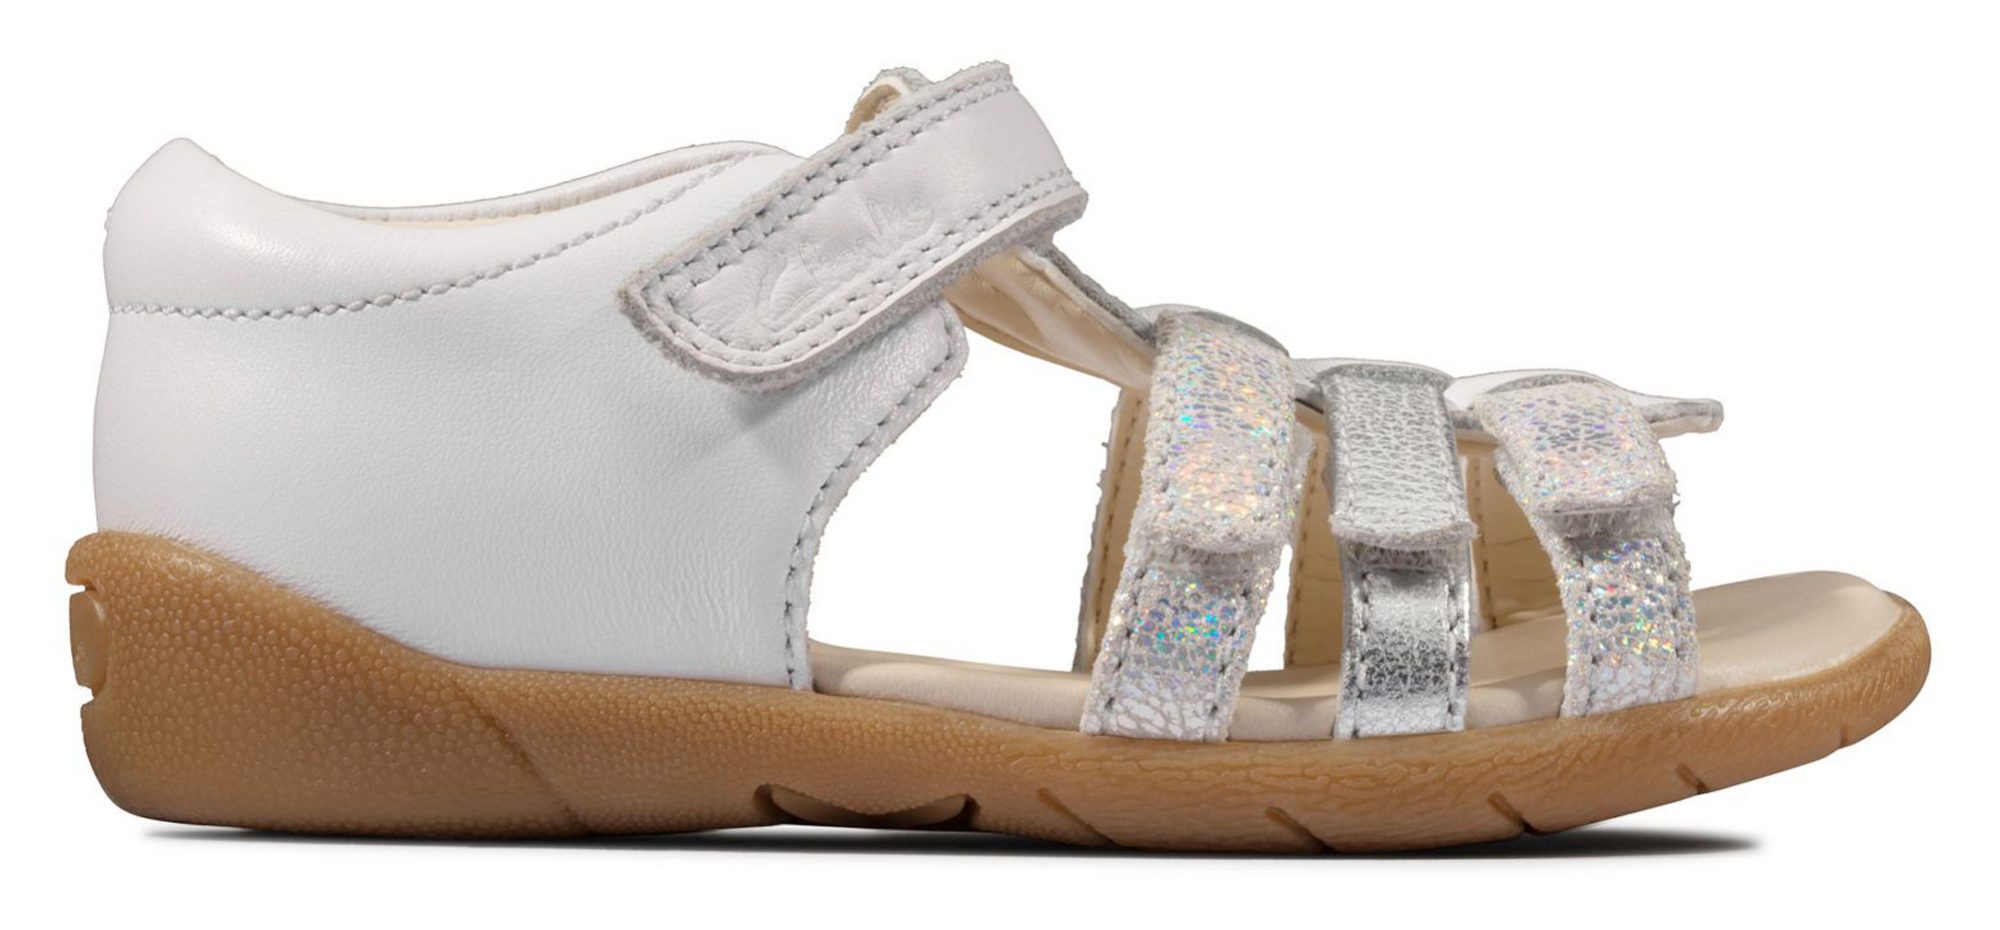 Clarks Zora Spark Toddler White Leather 26150536 - Girls Sandals ...